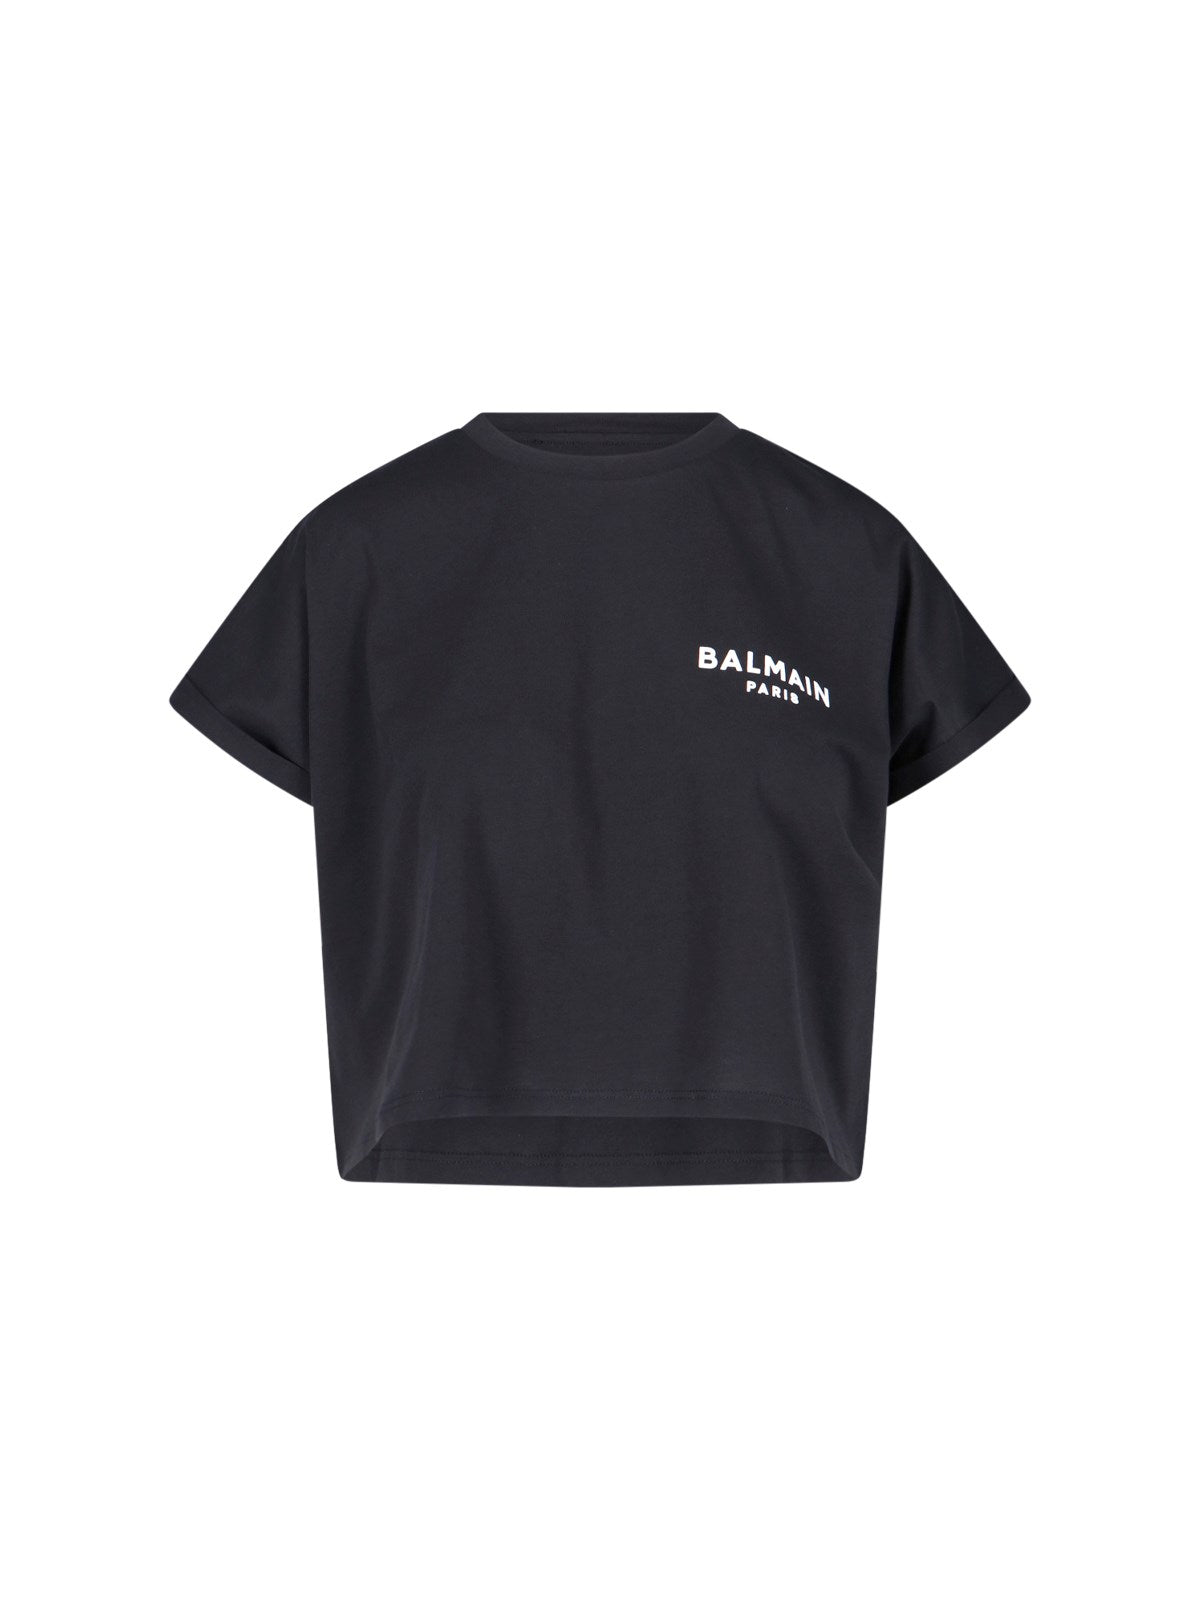 balmain t-shirt crop logo